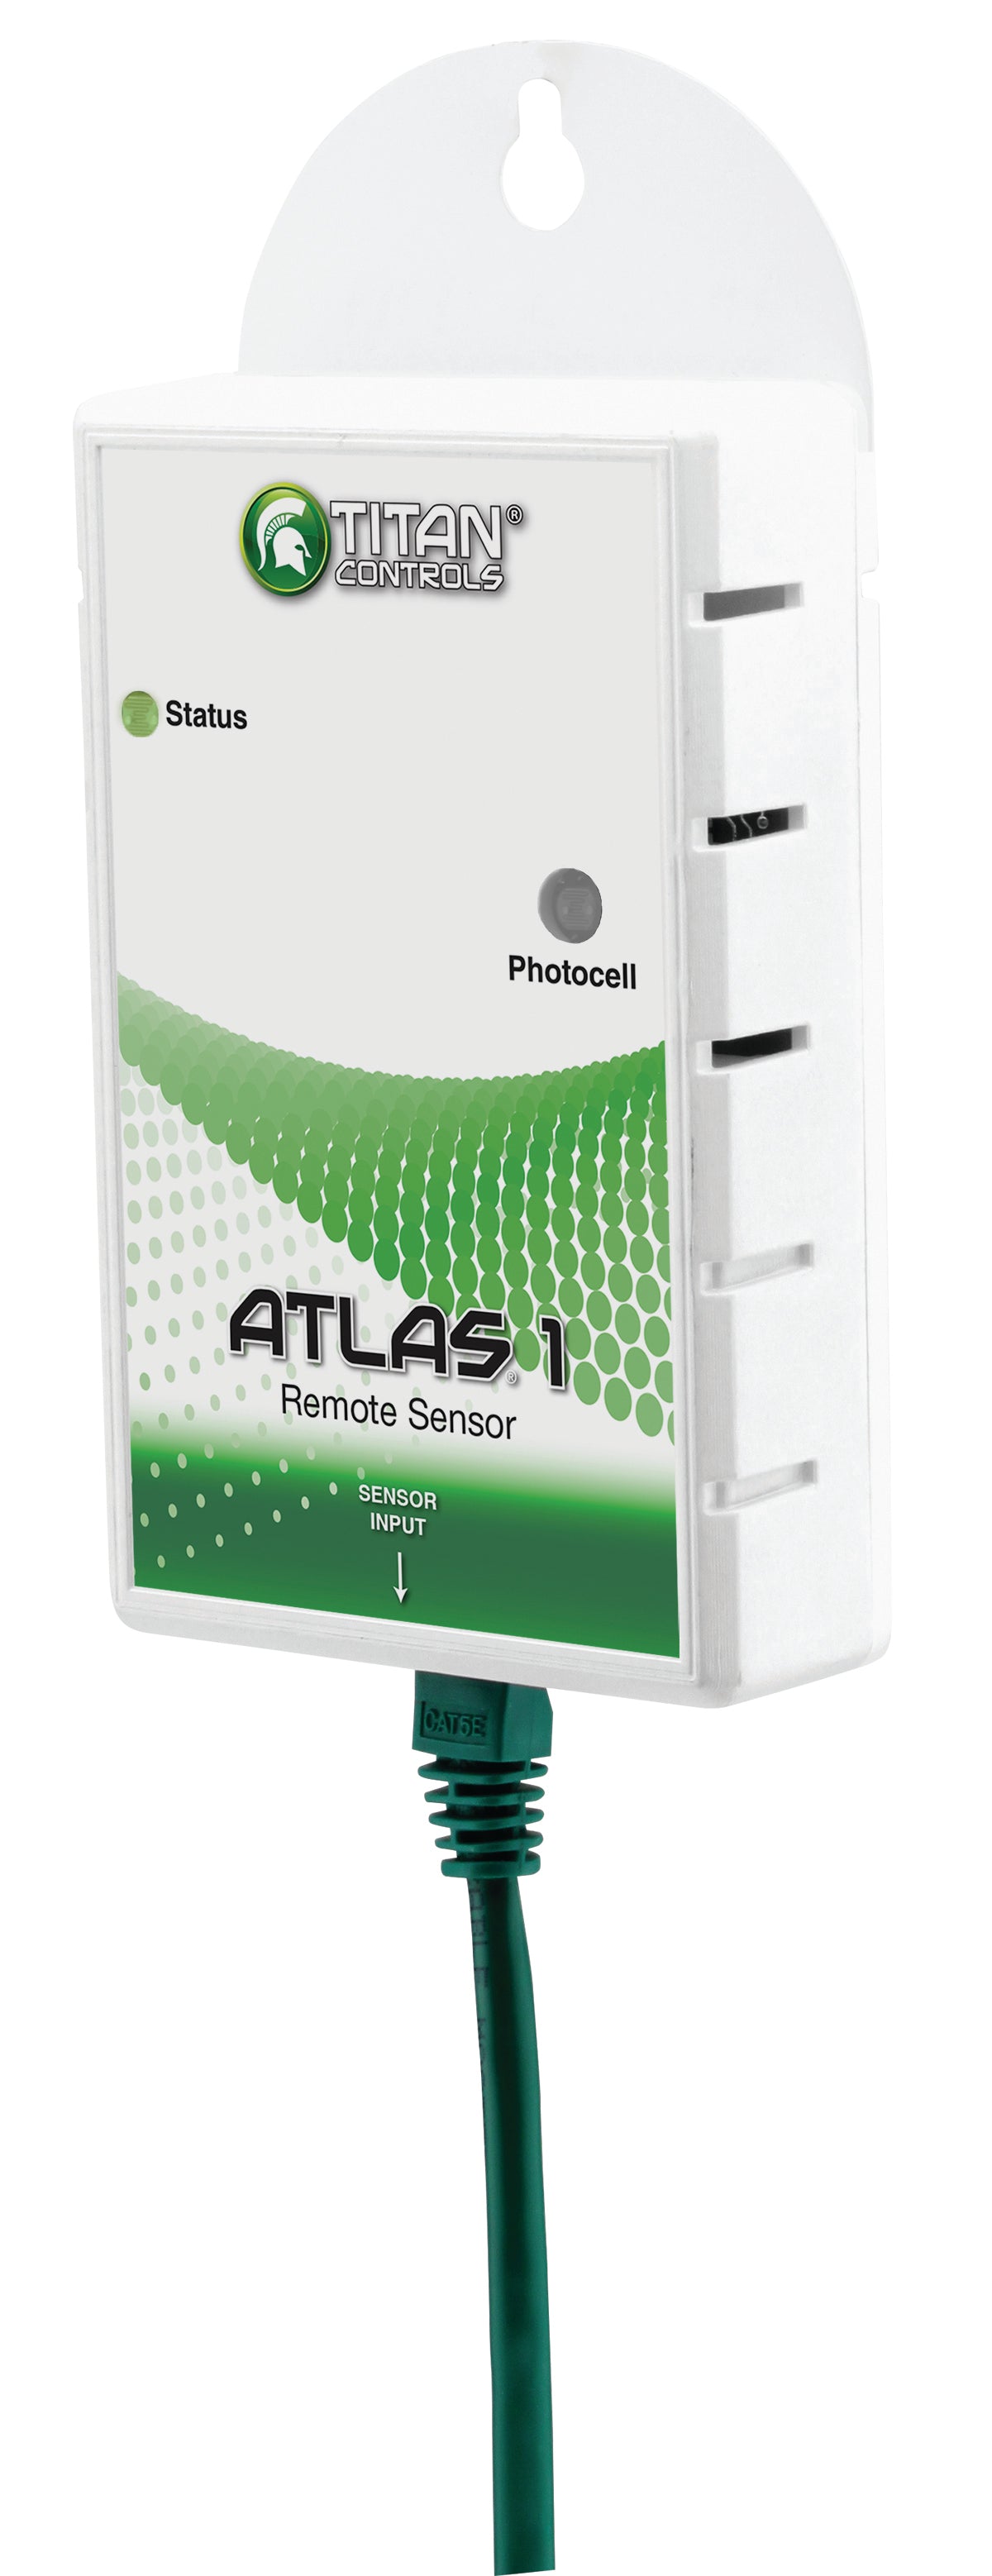 Titan Controls Atlas 1 CO2 Monitor / Controller w/ Remote Sensor